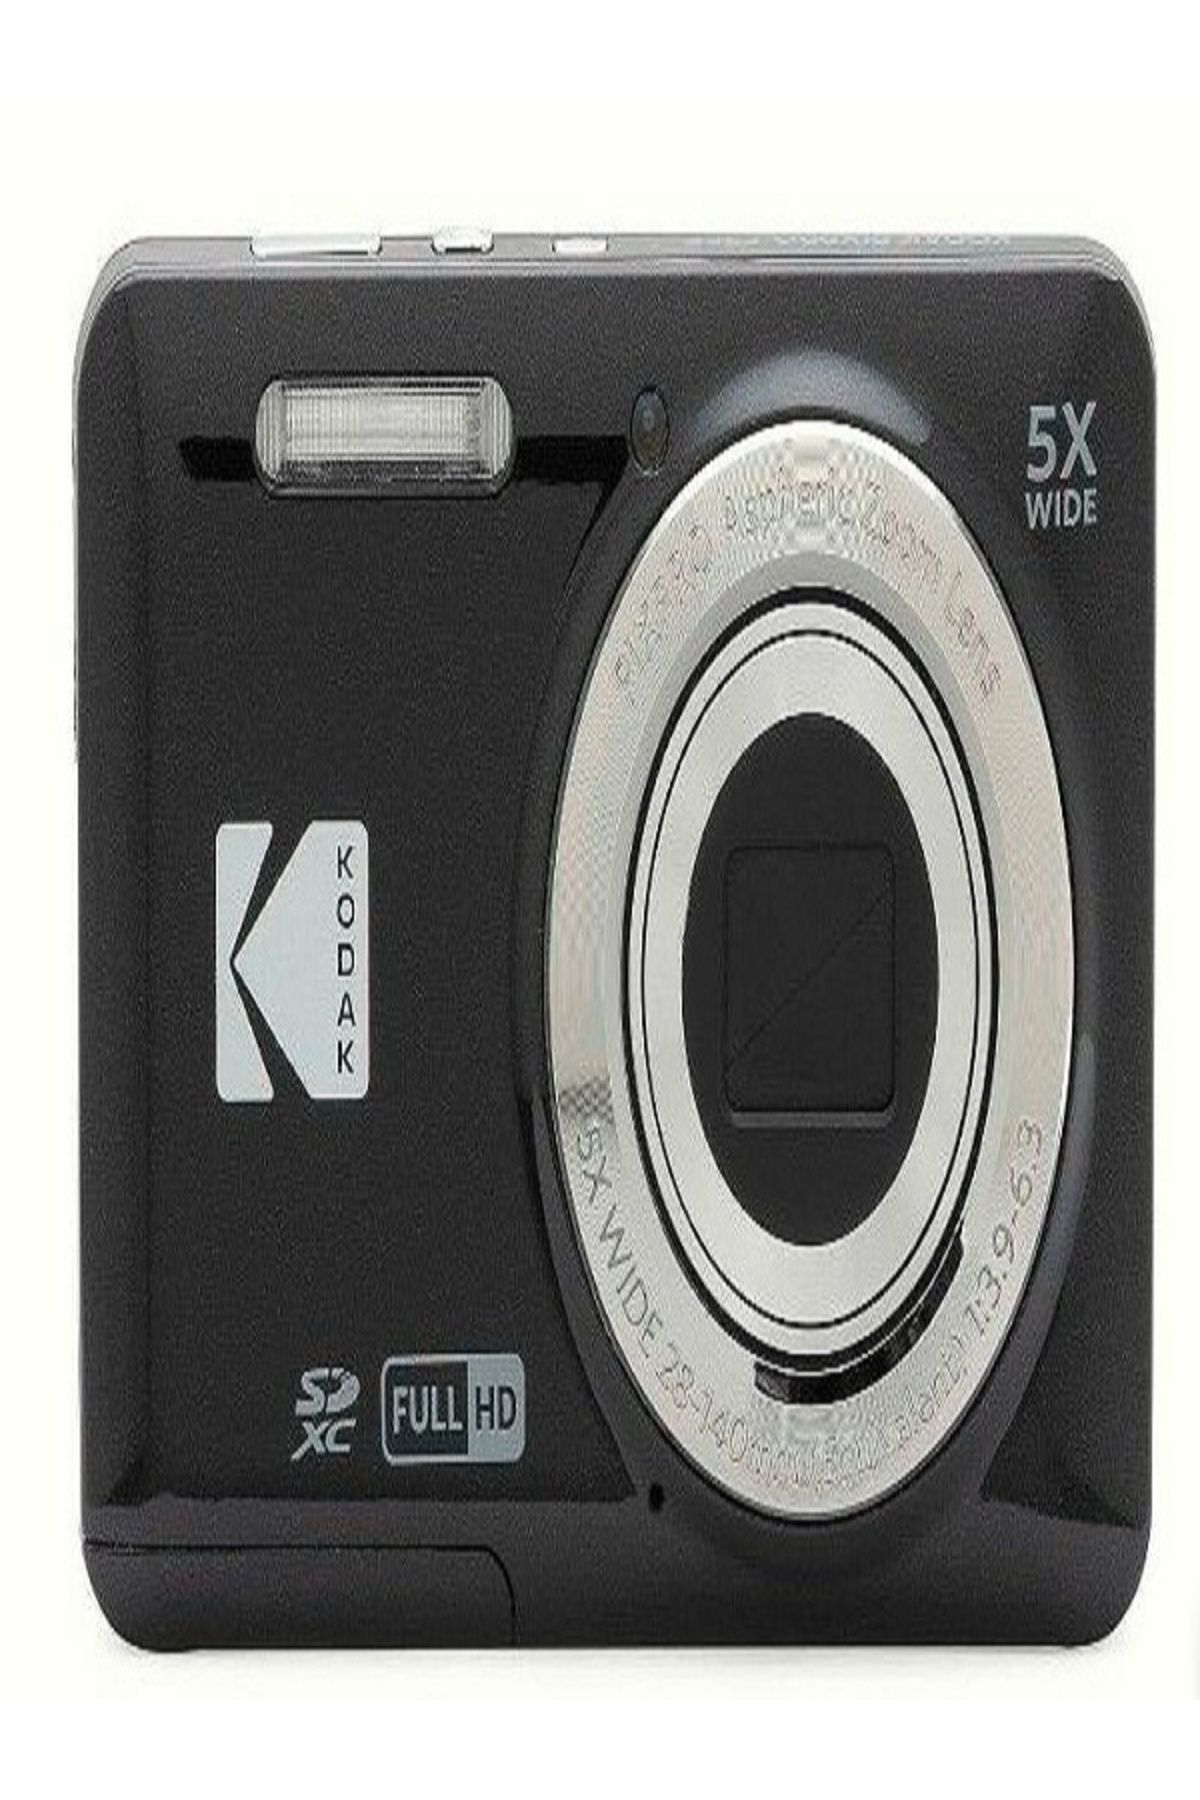 Kodak PIXPRO FZ55 Dijital Fotoğraf Makinesi (BLACK)